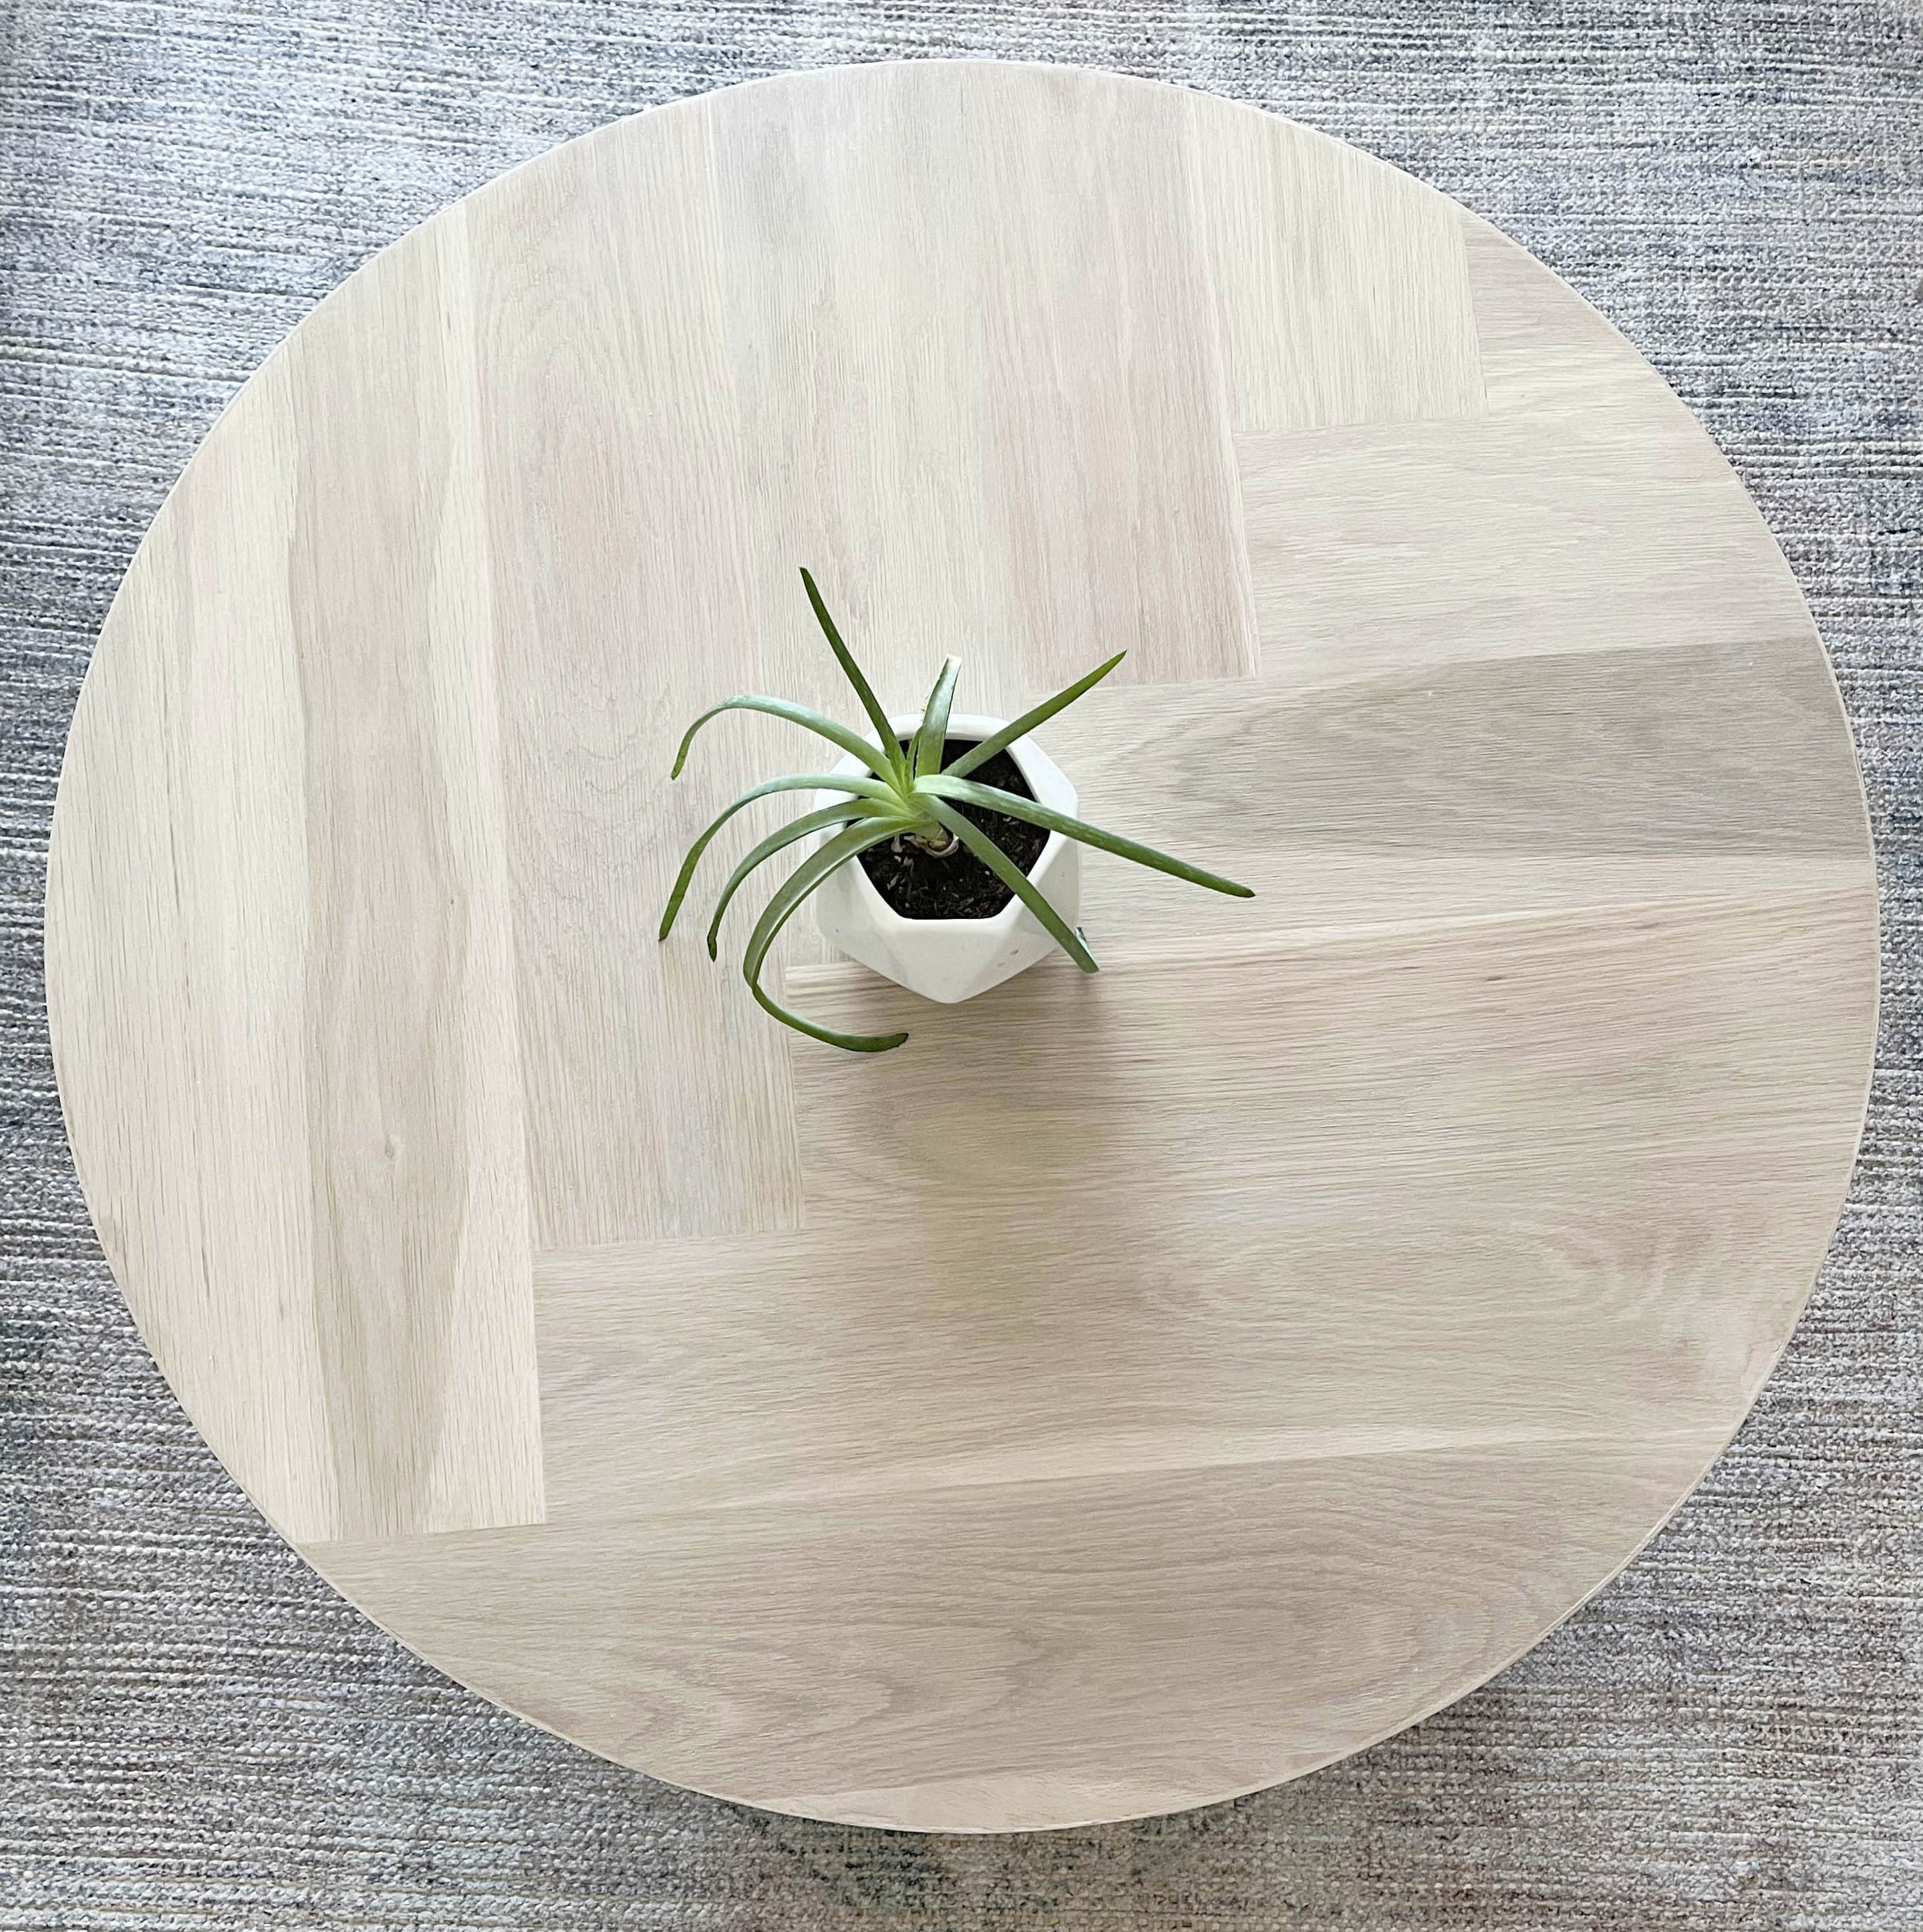 Round White Oak Wood Pedestal Dining Table, Single or Double Herringbone Top